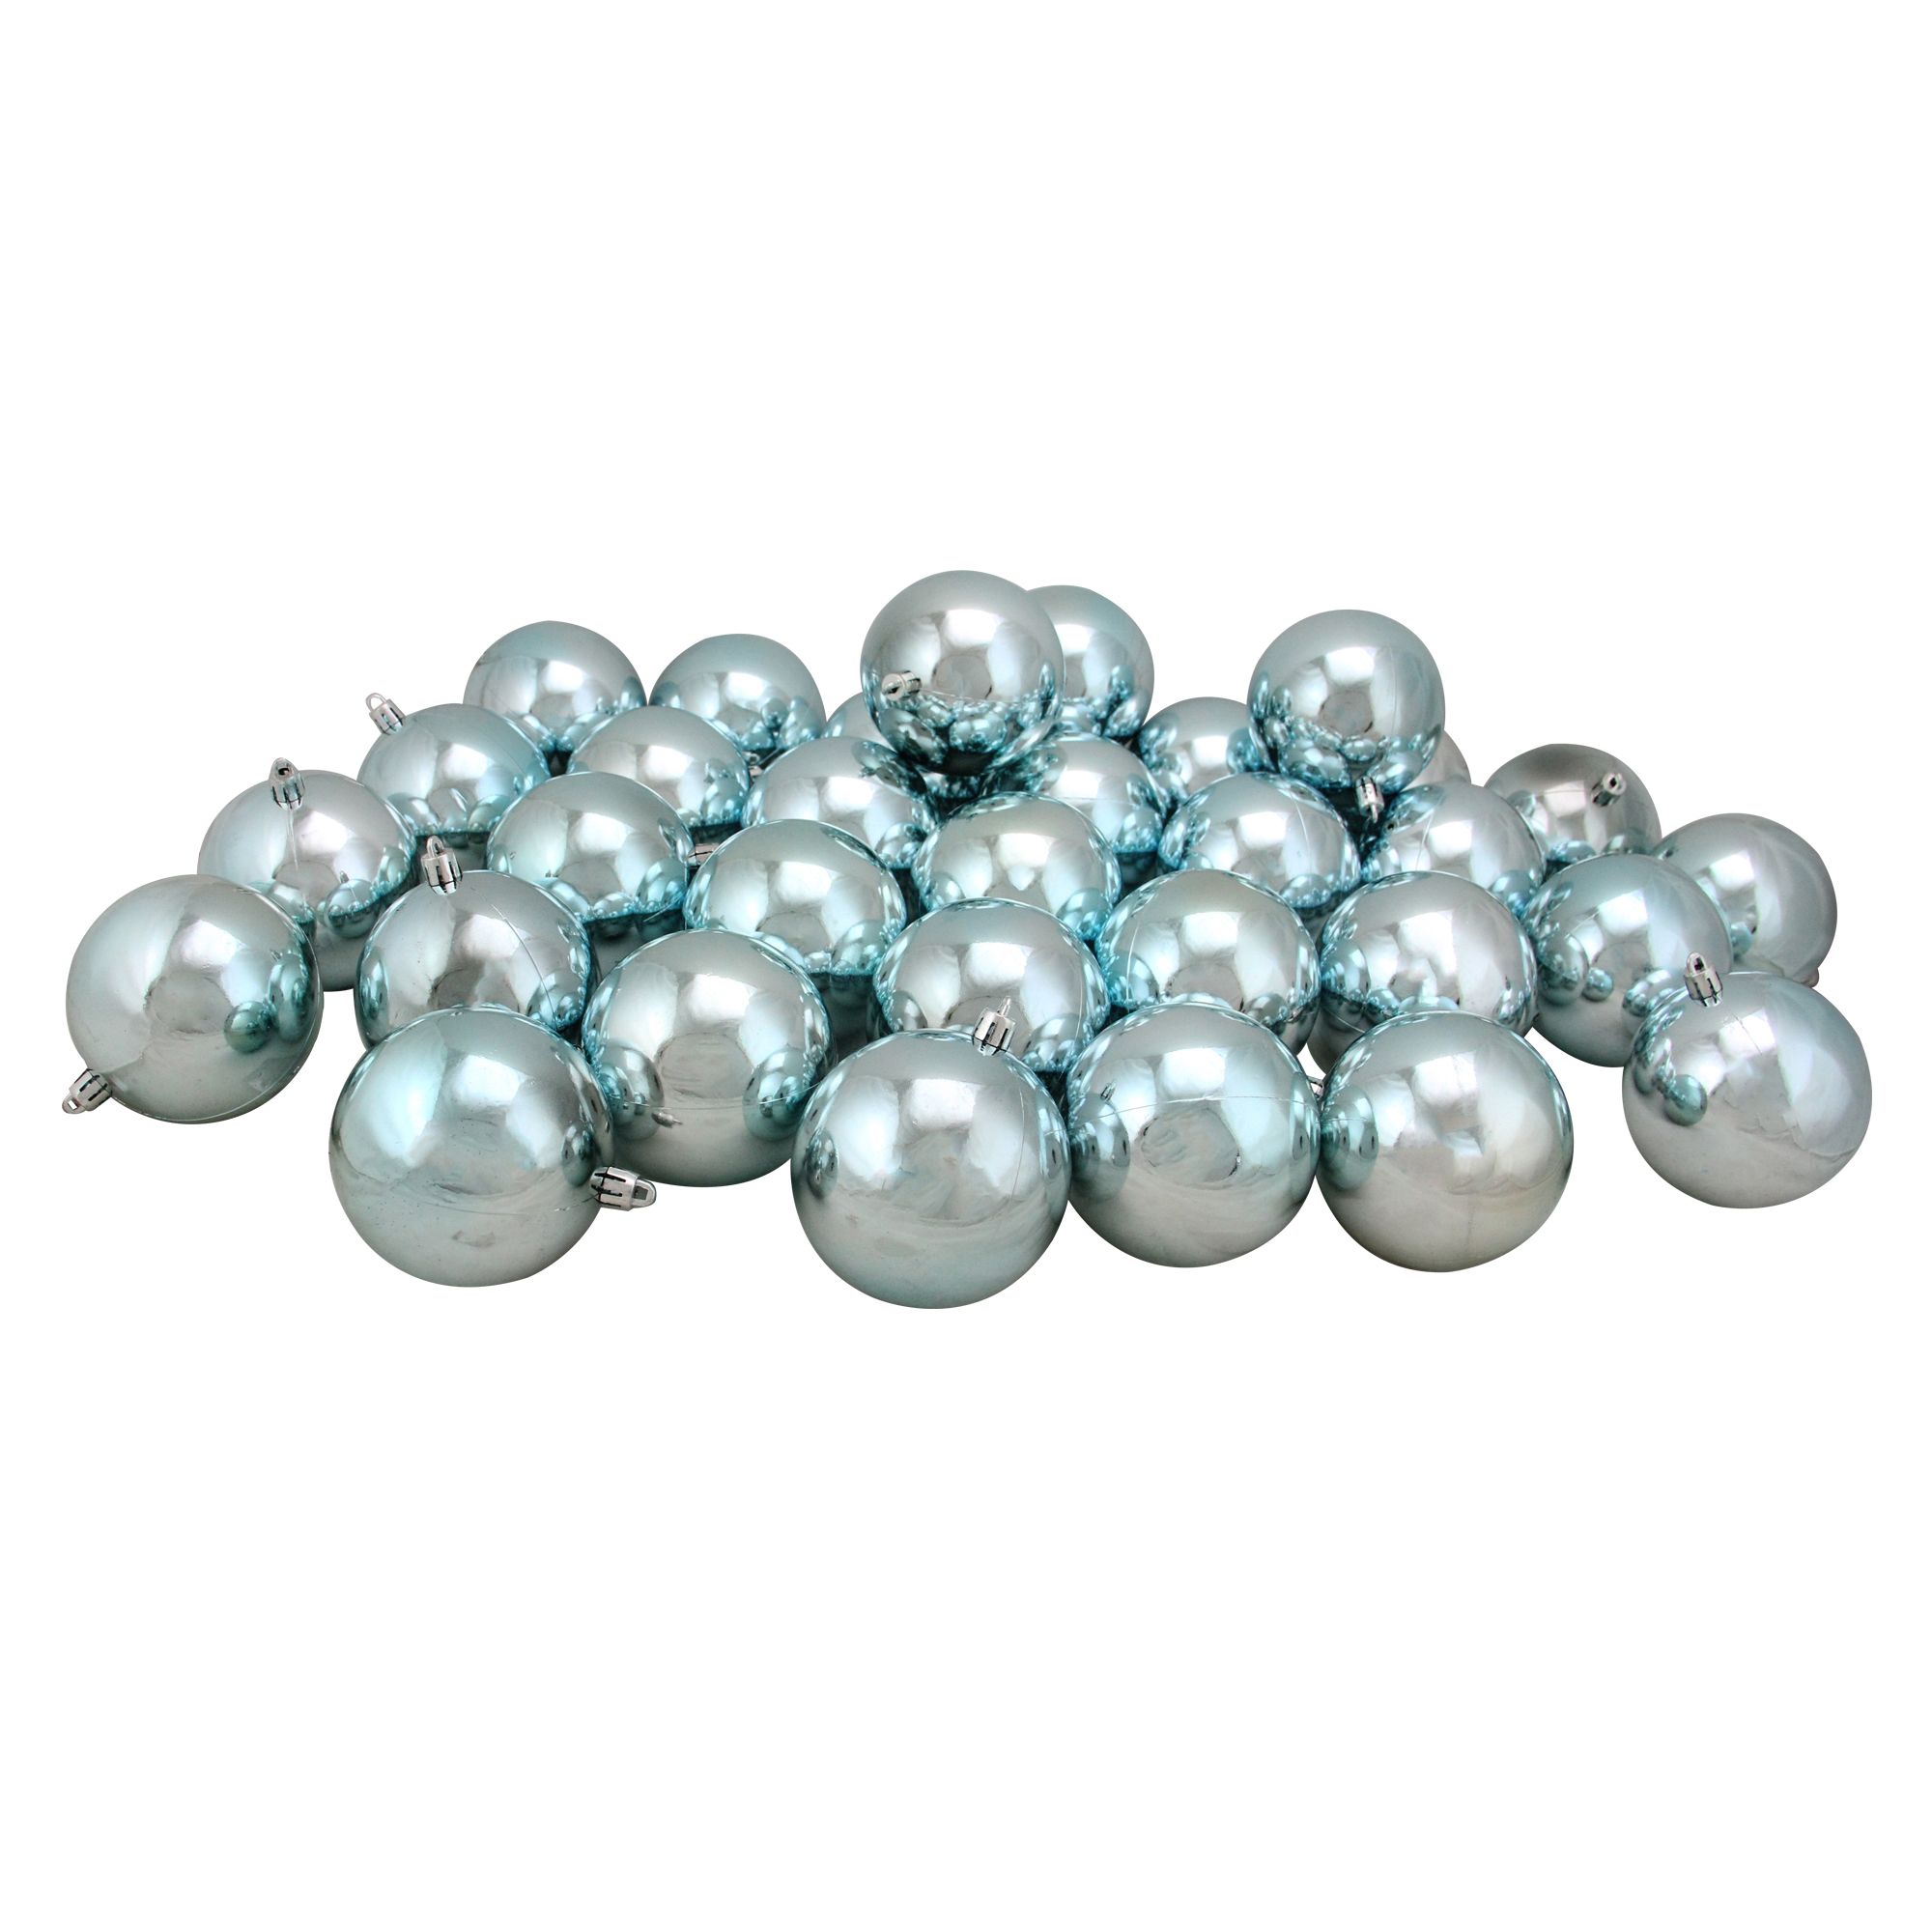 Northlight 3.25&quot; Shatterproof Shiny Christmas Ball Ornaments, 32 ct. - Mermaid Blue